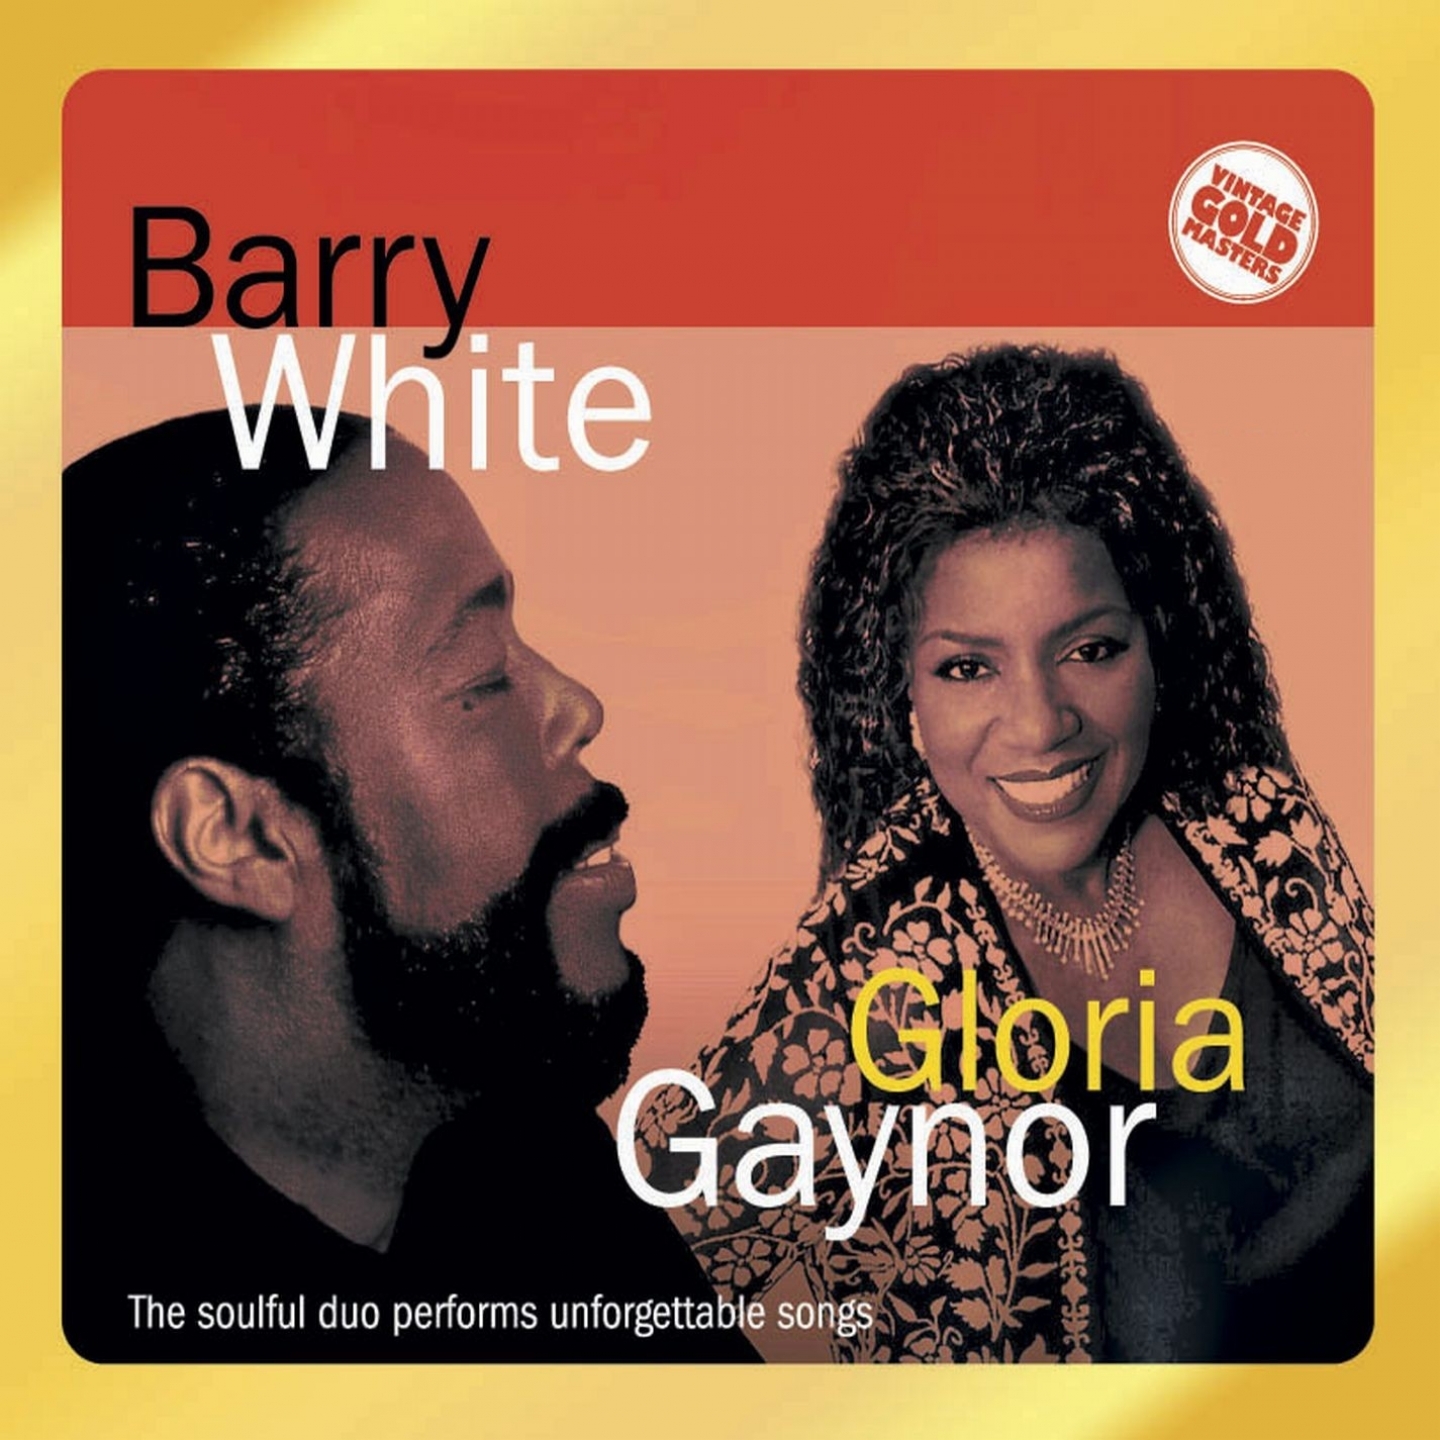 Barry White & Gloria Gaynor